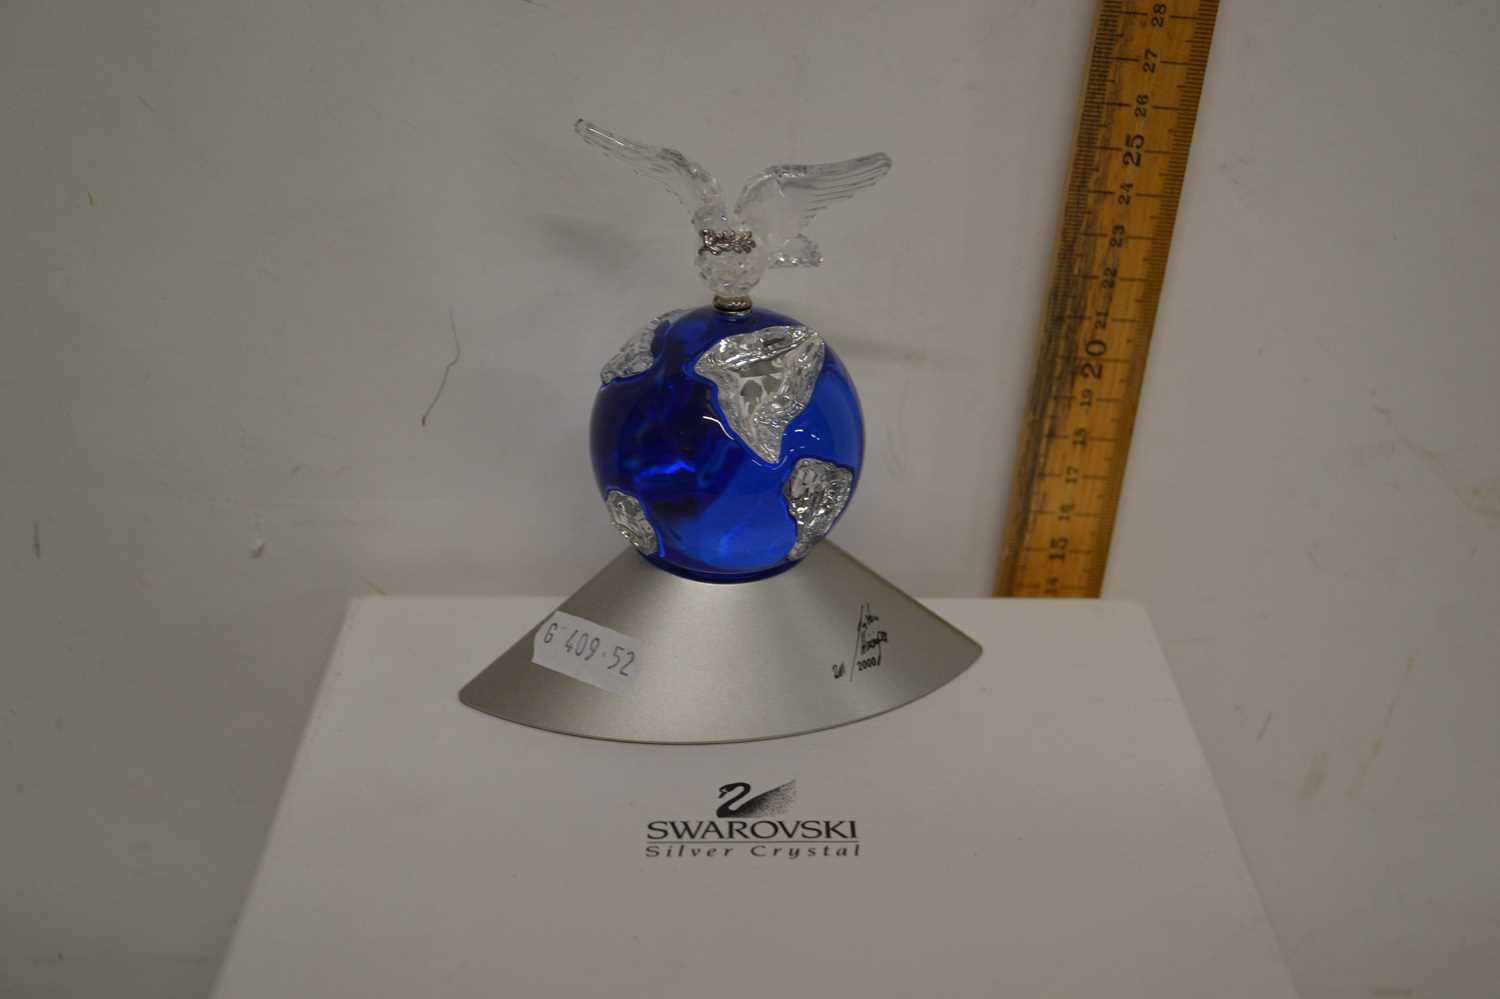 A Swarovski crystal millennium edition model - Dove of Peace